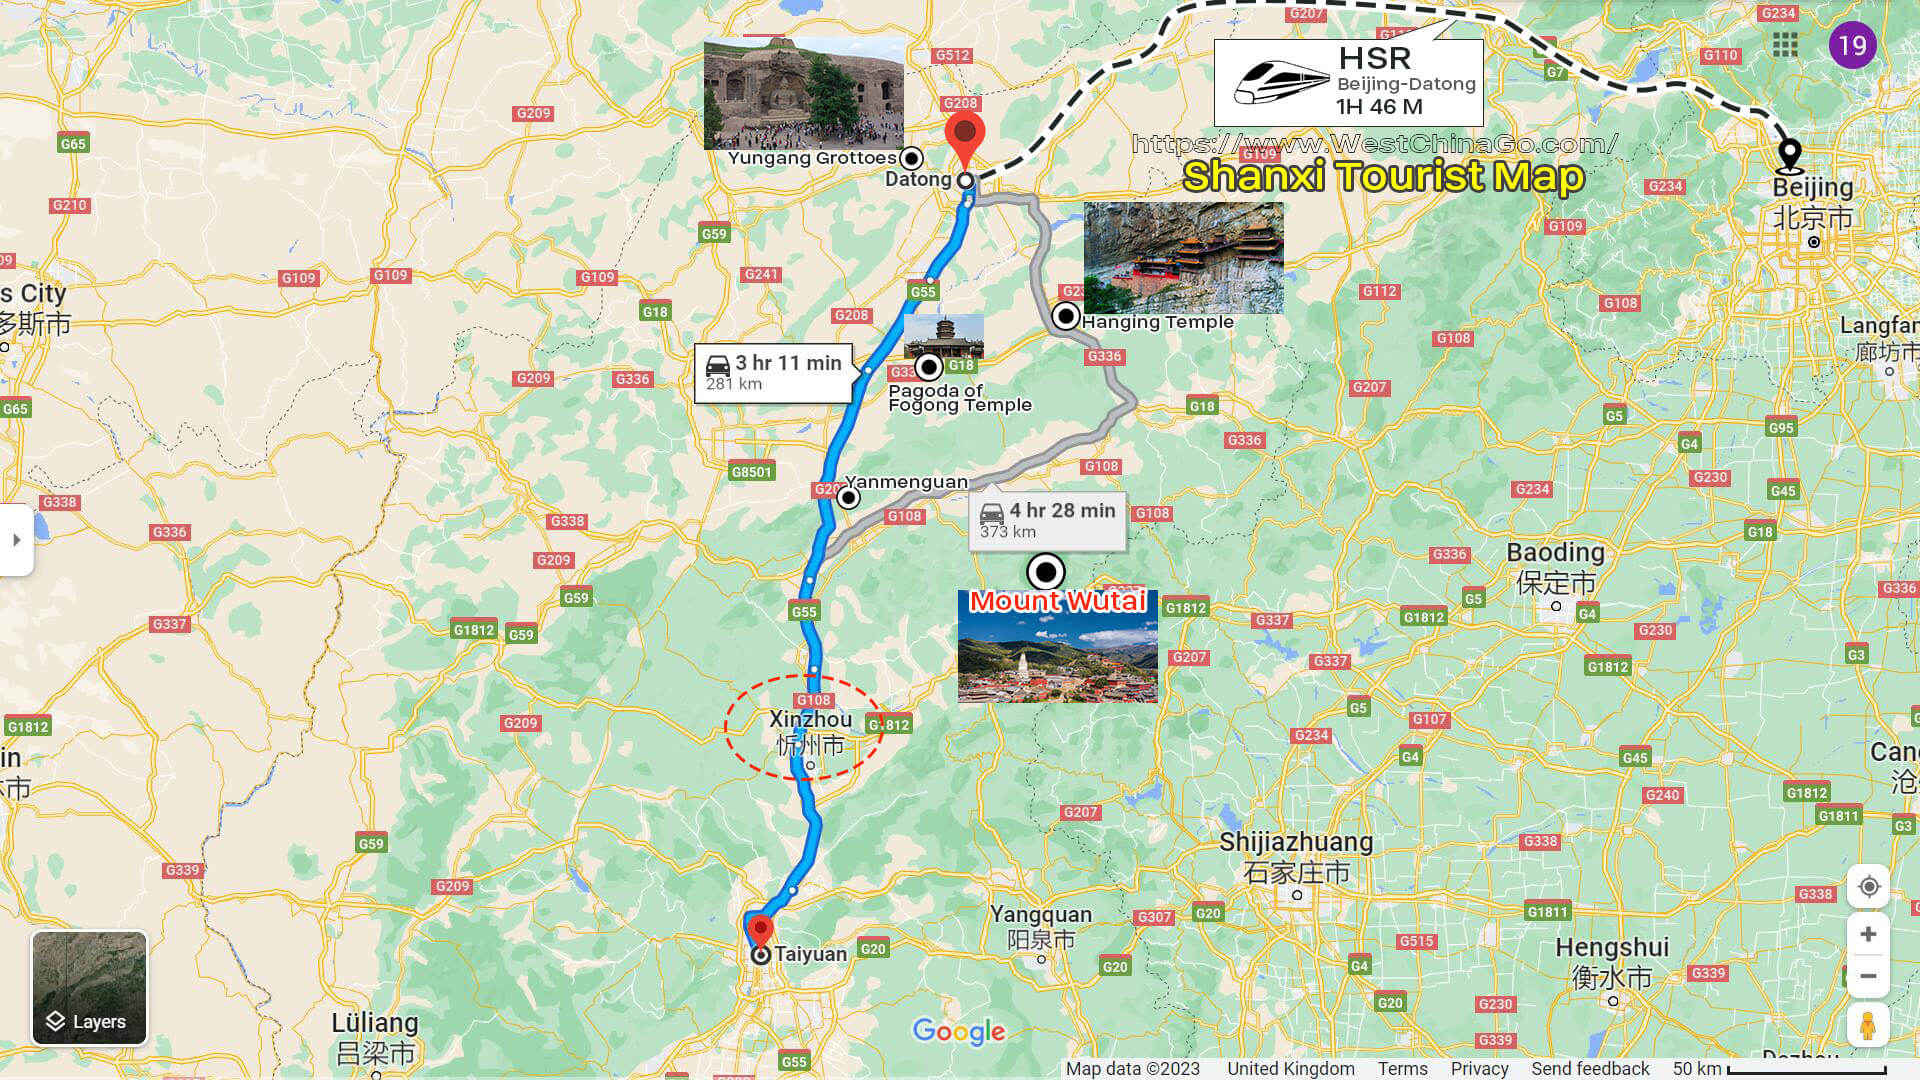 Shanxi Wutaishan Mountain Tourist Map